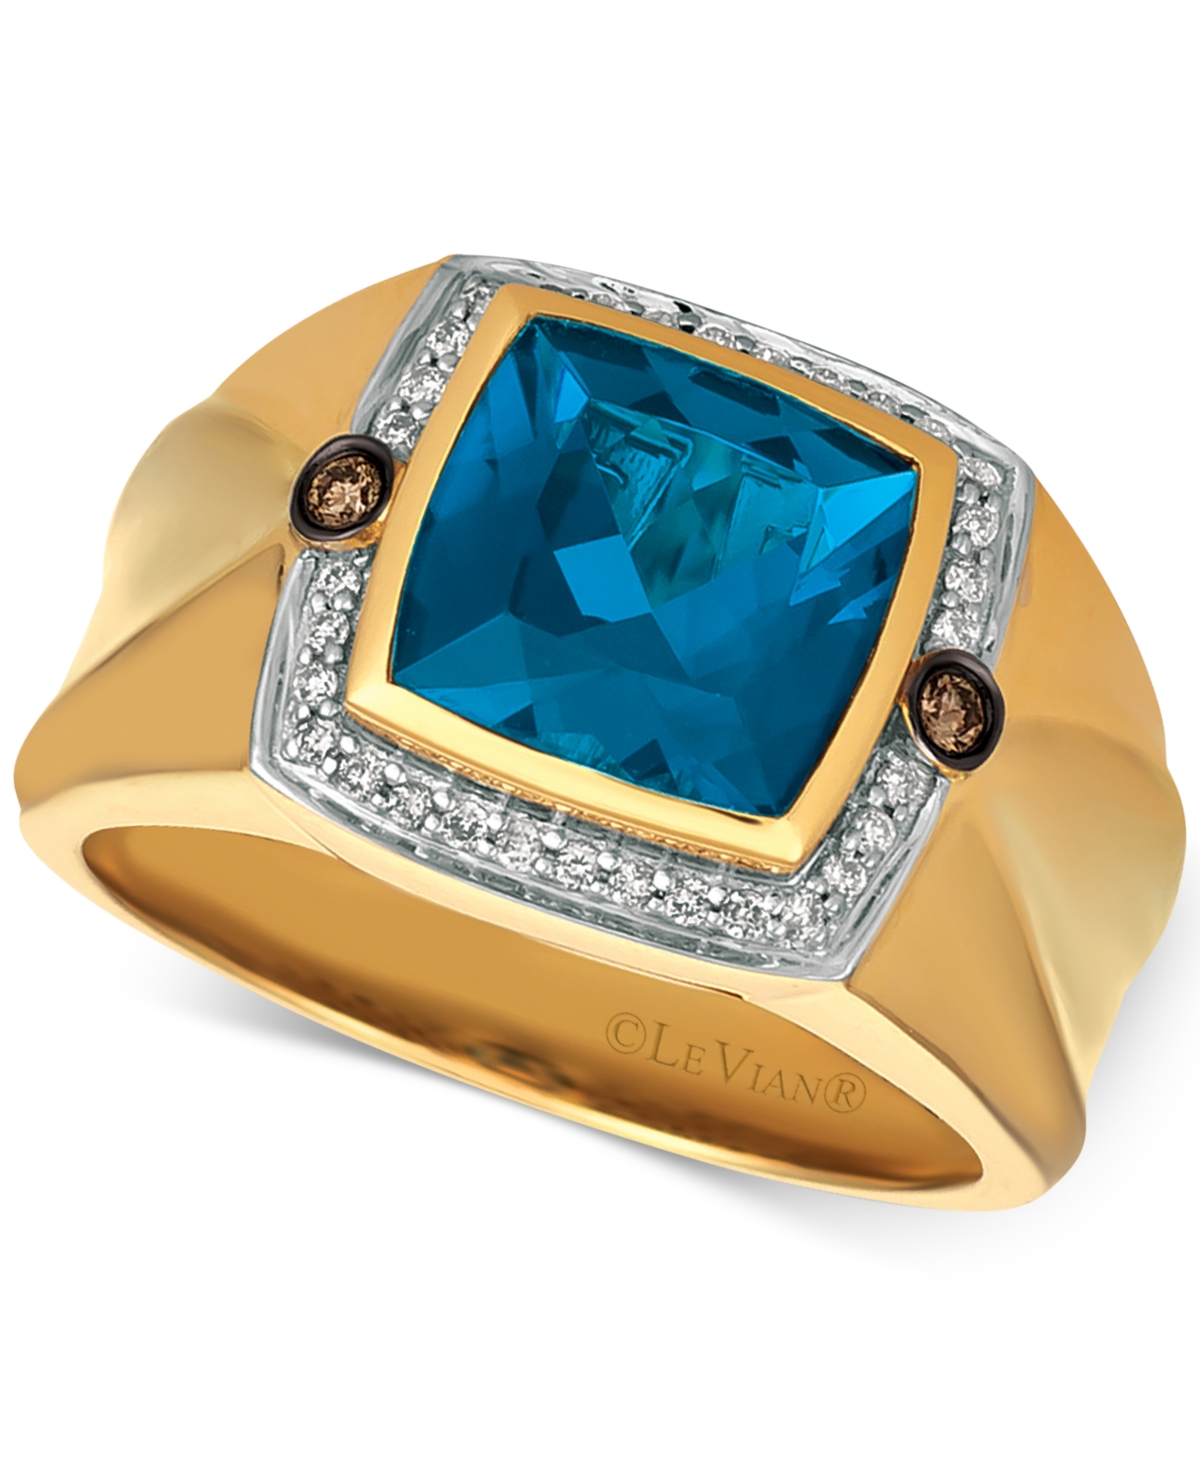 Gents Men's London Blue Topaz (4-1/8 ct. t.w.) & Diamond (1/5 ct. t.w.) Ring in 14k Gold - Gold